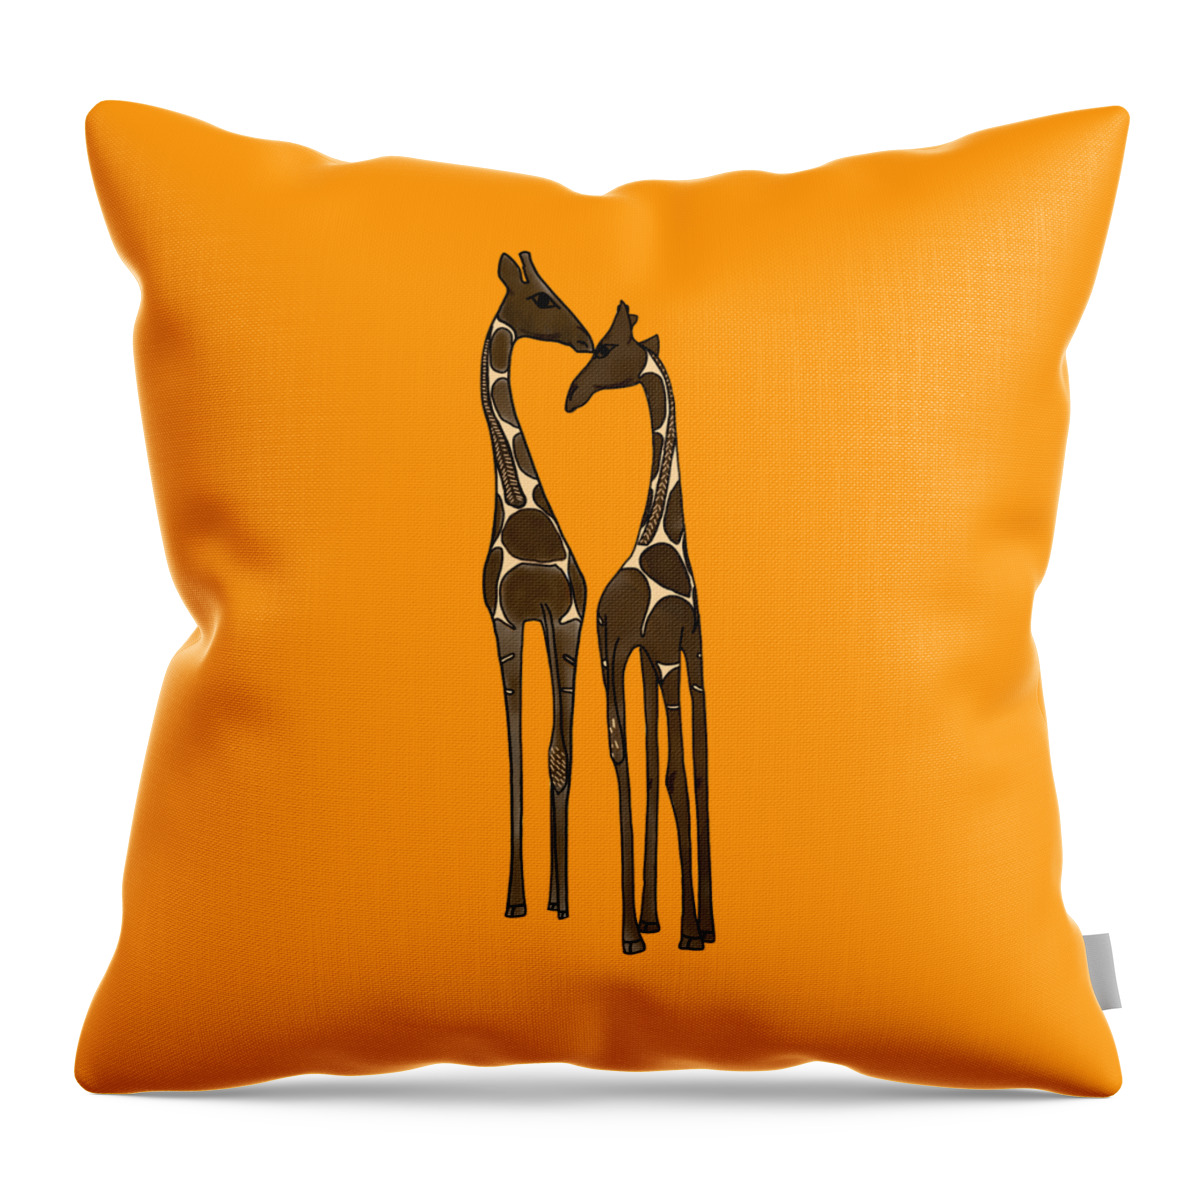 Giraffe Throw Pillow featuring the digital art Upendo by Aanya's Art 4 Earth